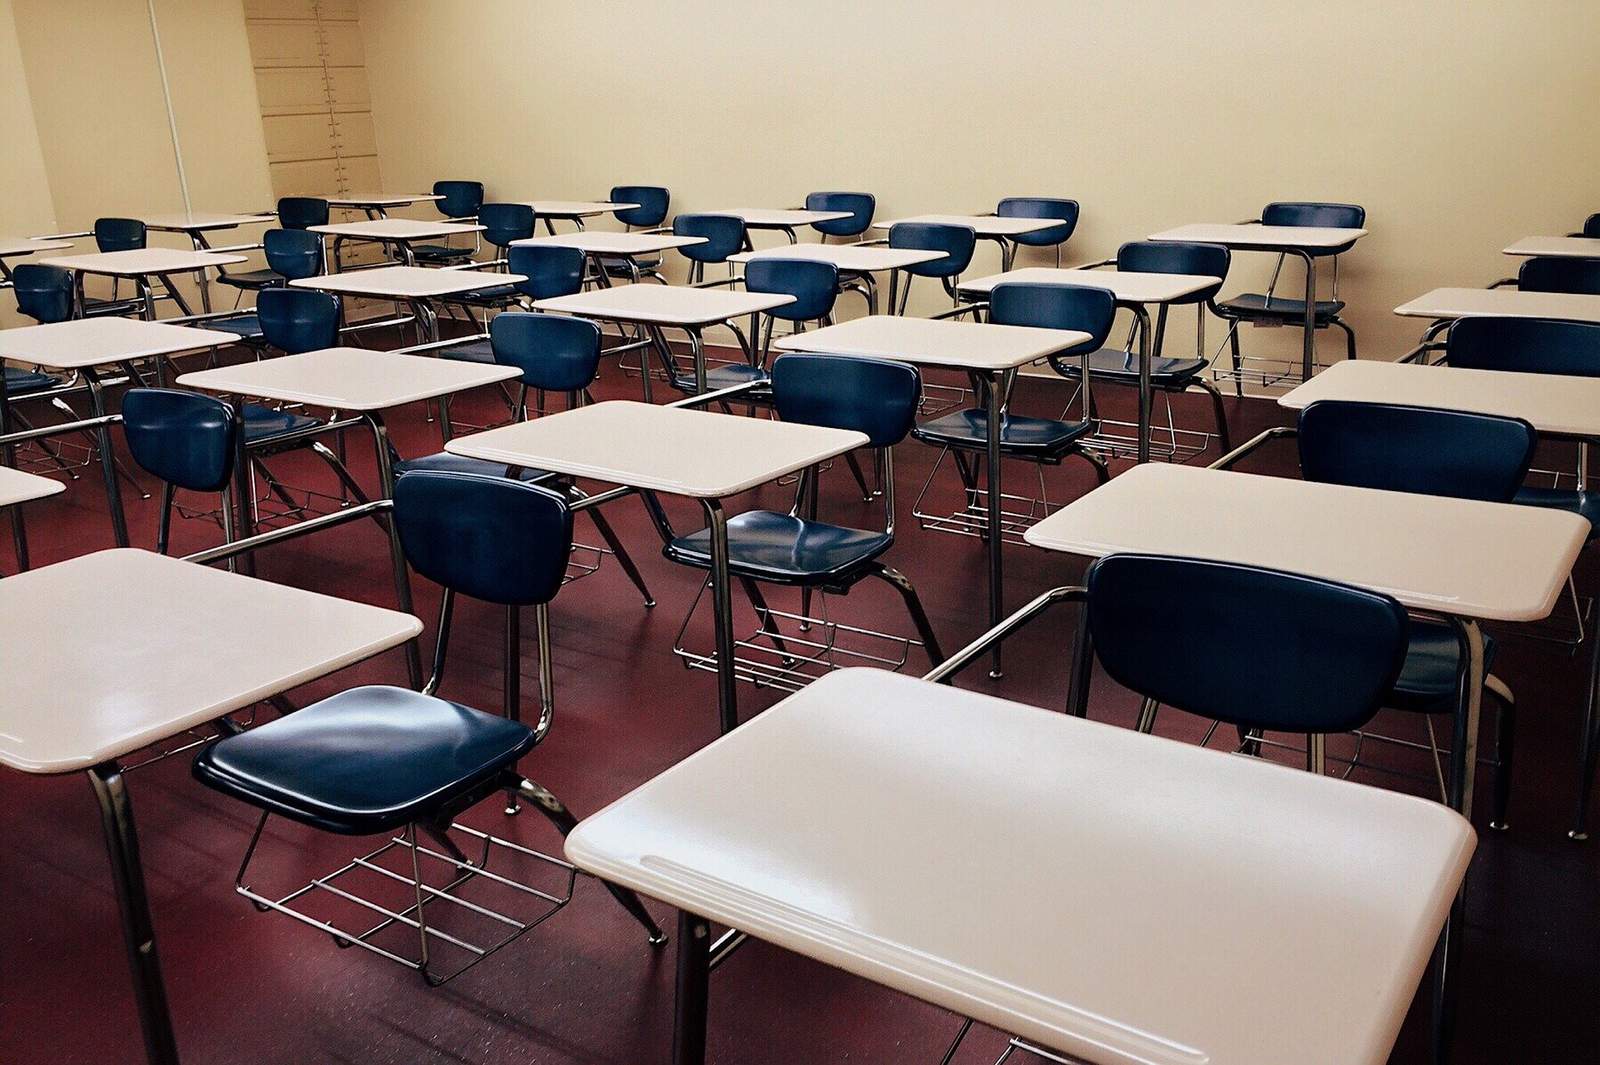 San Antonio’s school risk now at ‘low’ due to decrease in COVID-19 cases